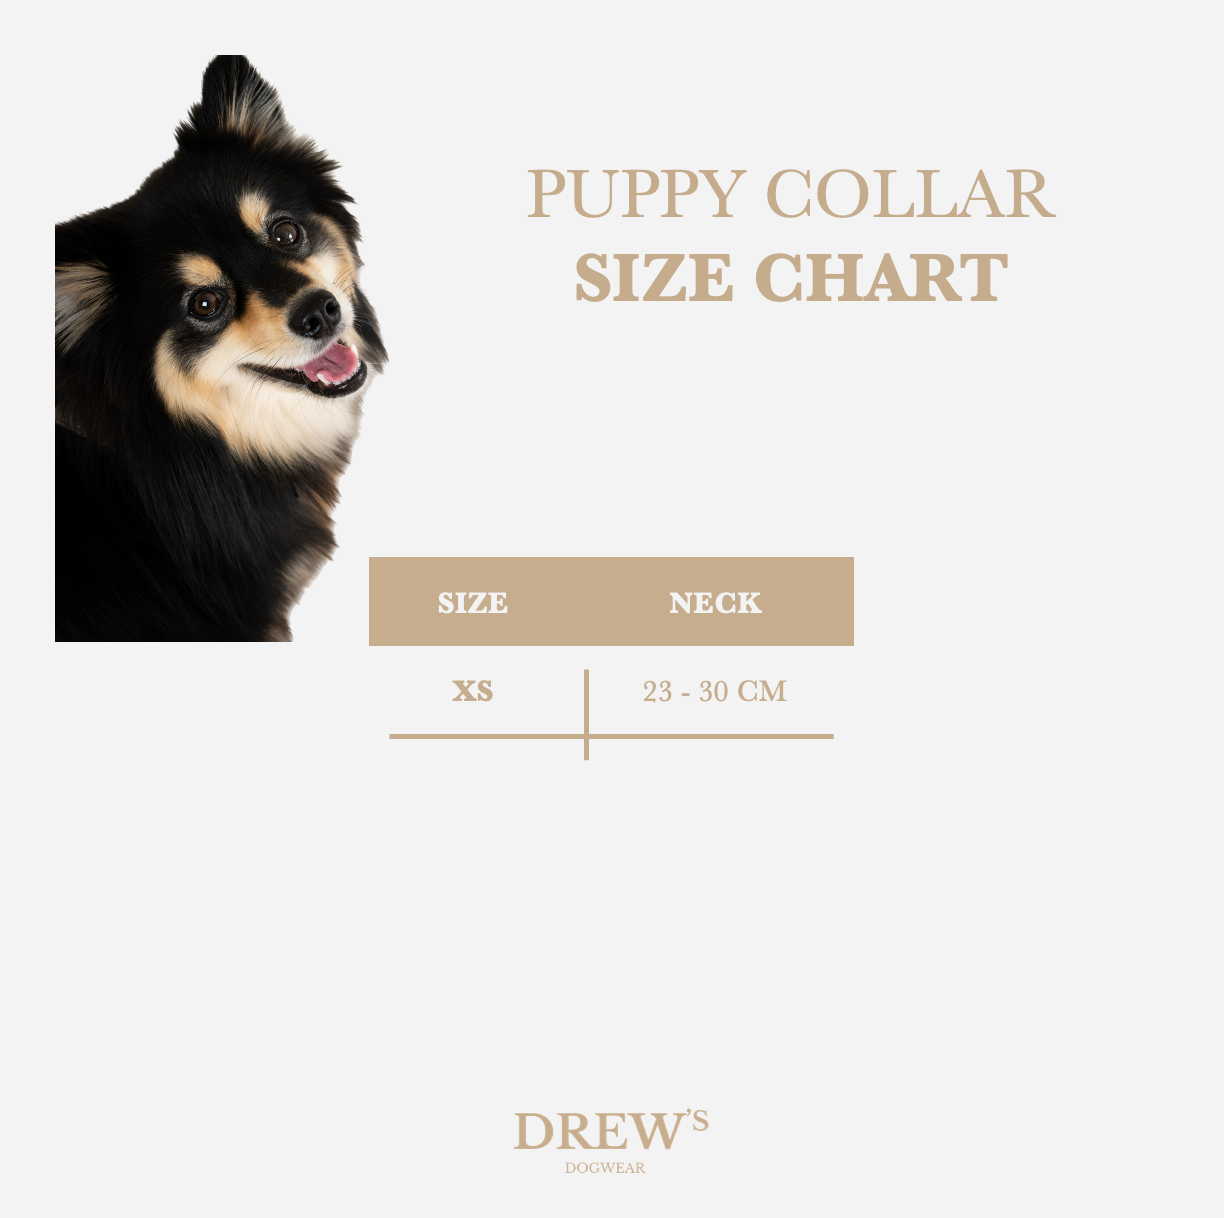 size-chart-puppy-collar